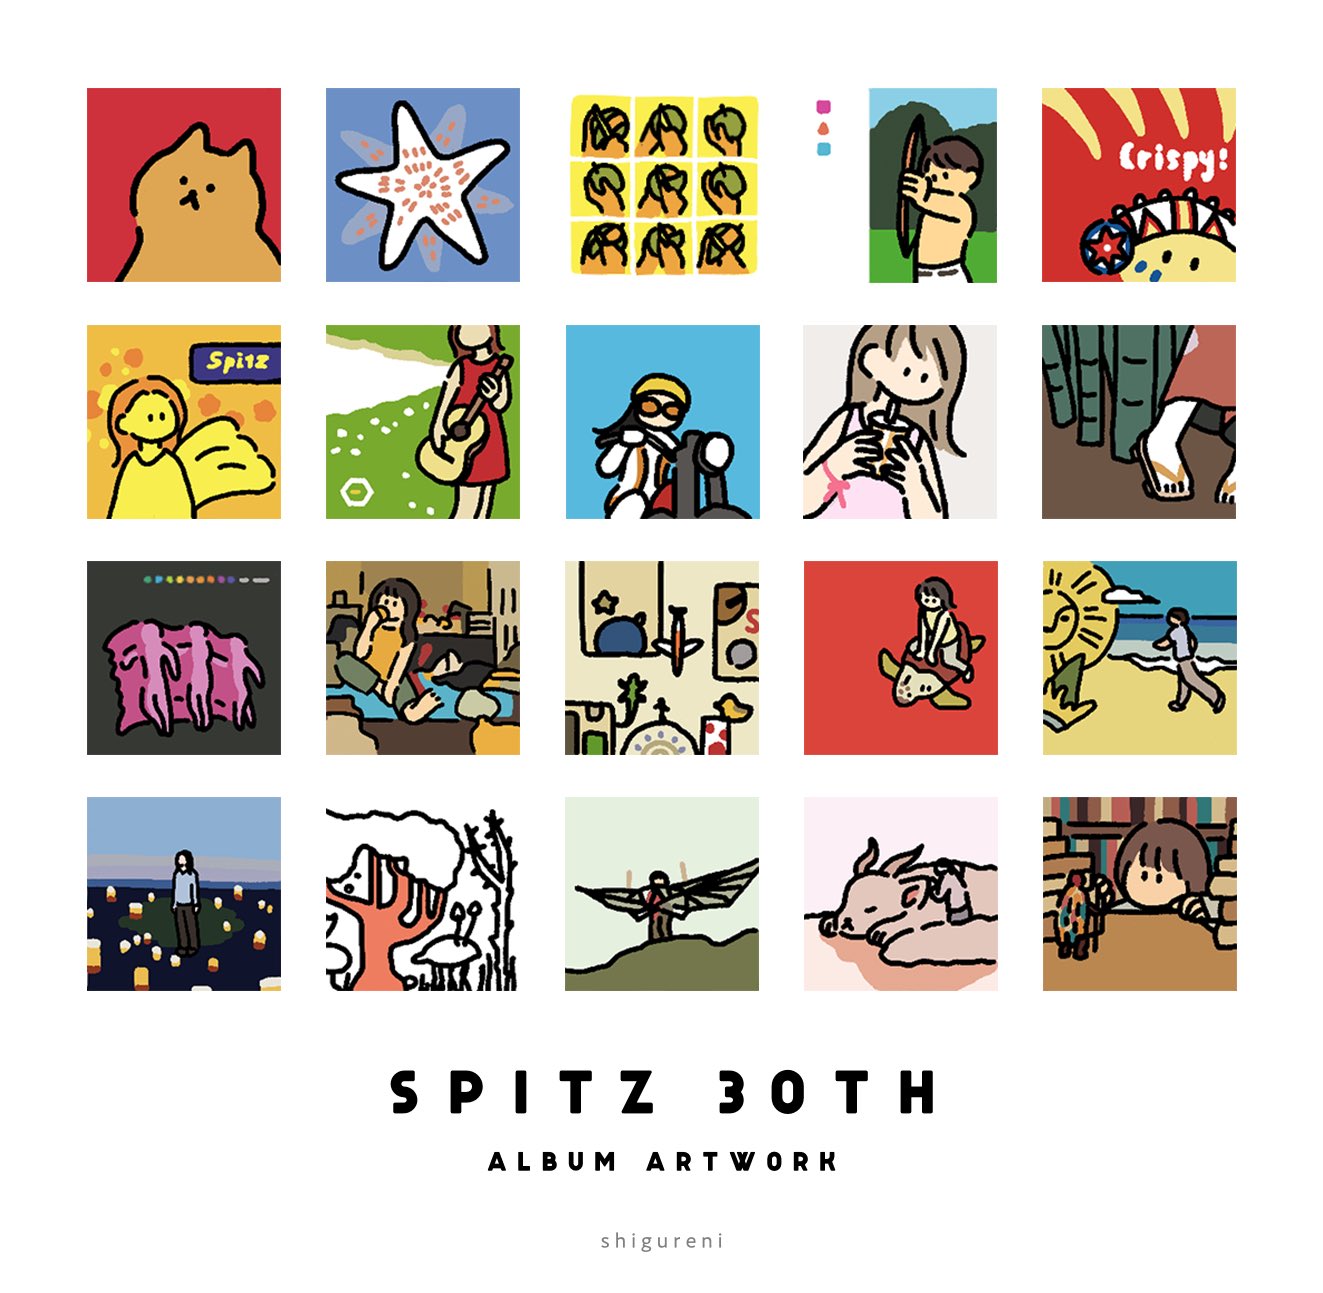 Shigureni 大好きなスピッツのアルバムアートワークをイラストにしてみました スピッツ スピッツ325 Spitz T Co Xwpzlzwl96 Twitter